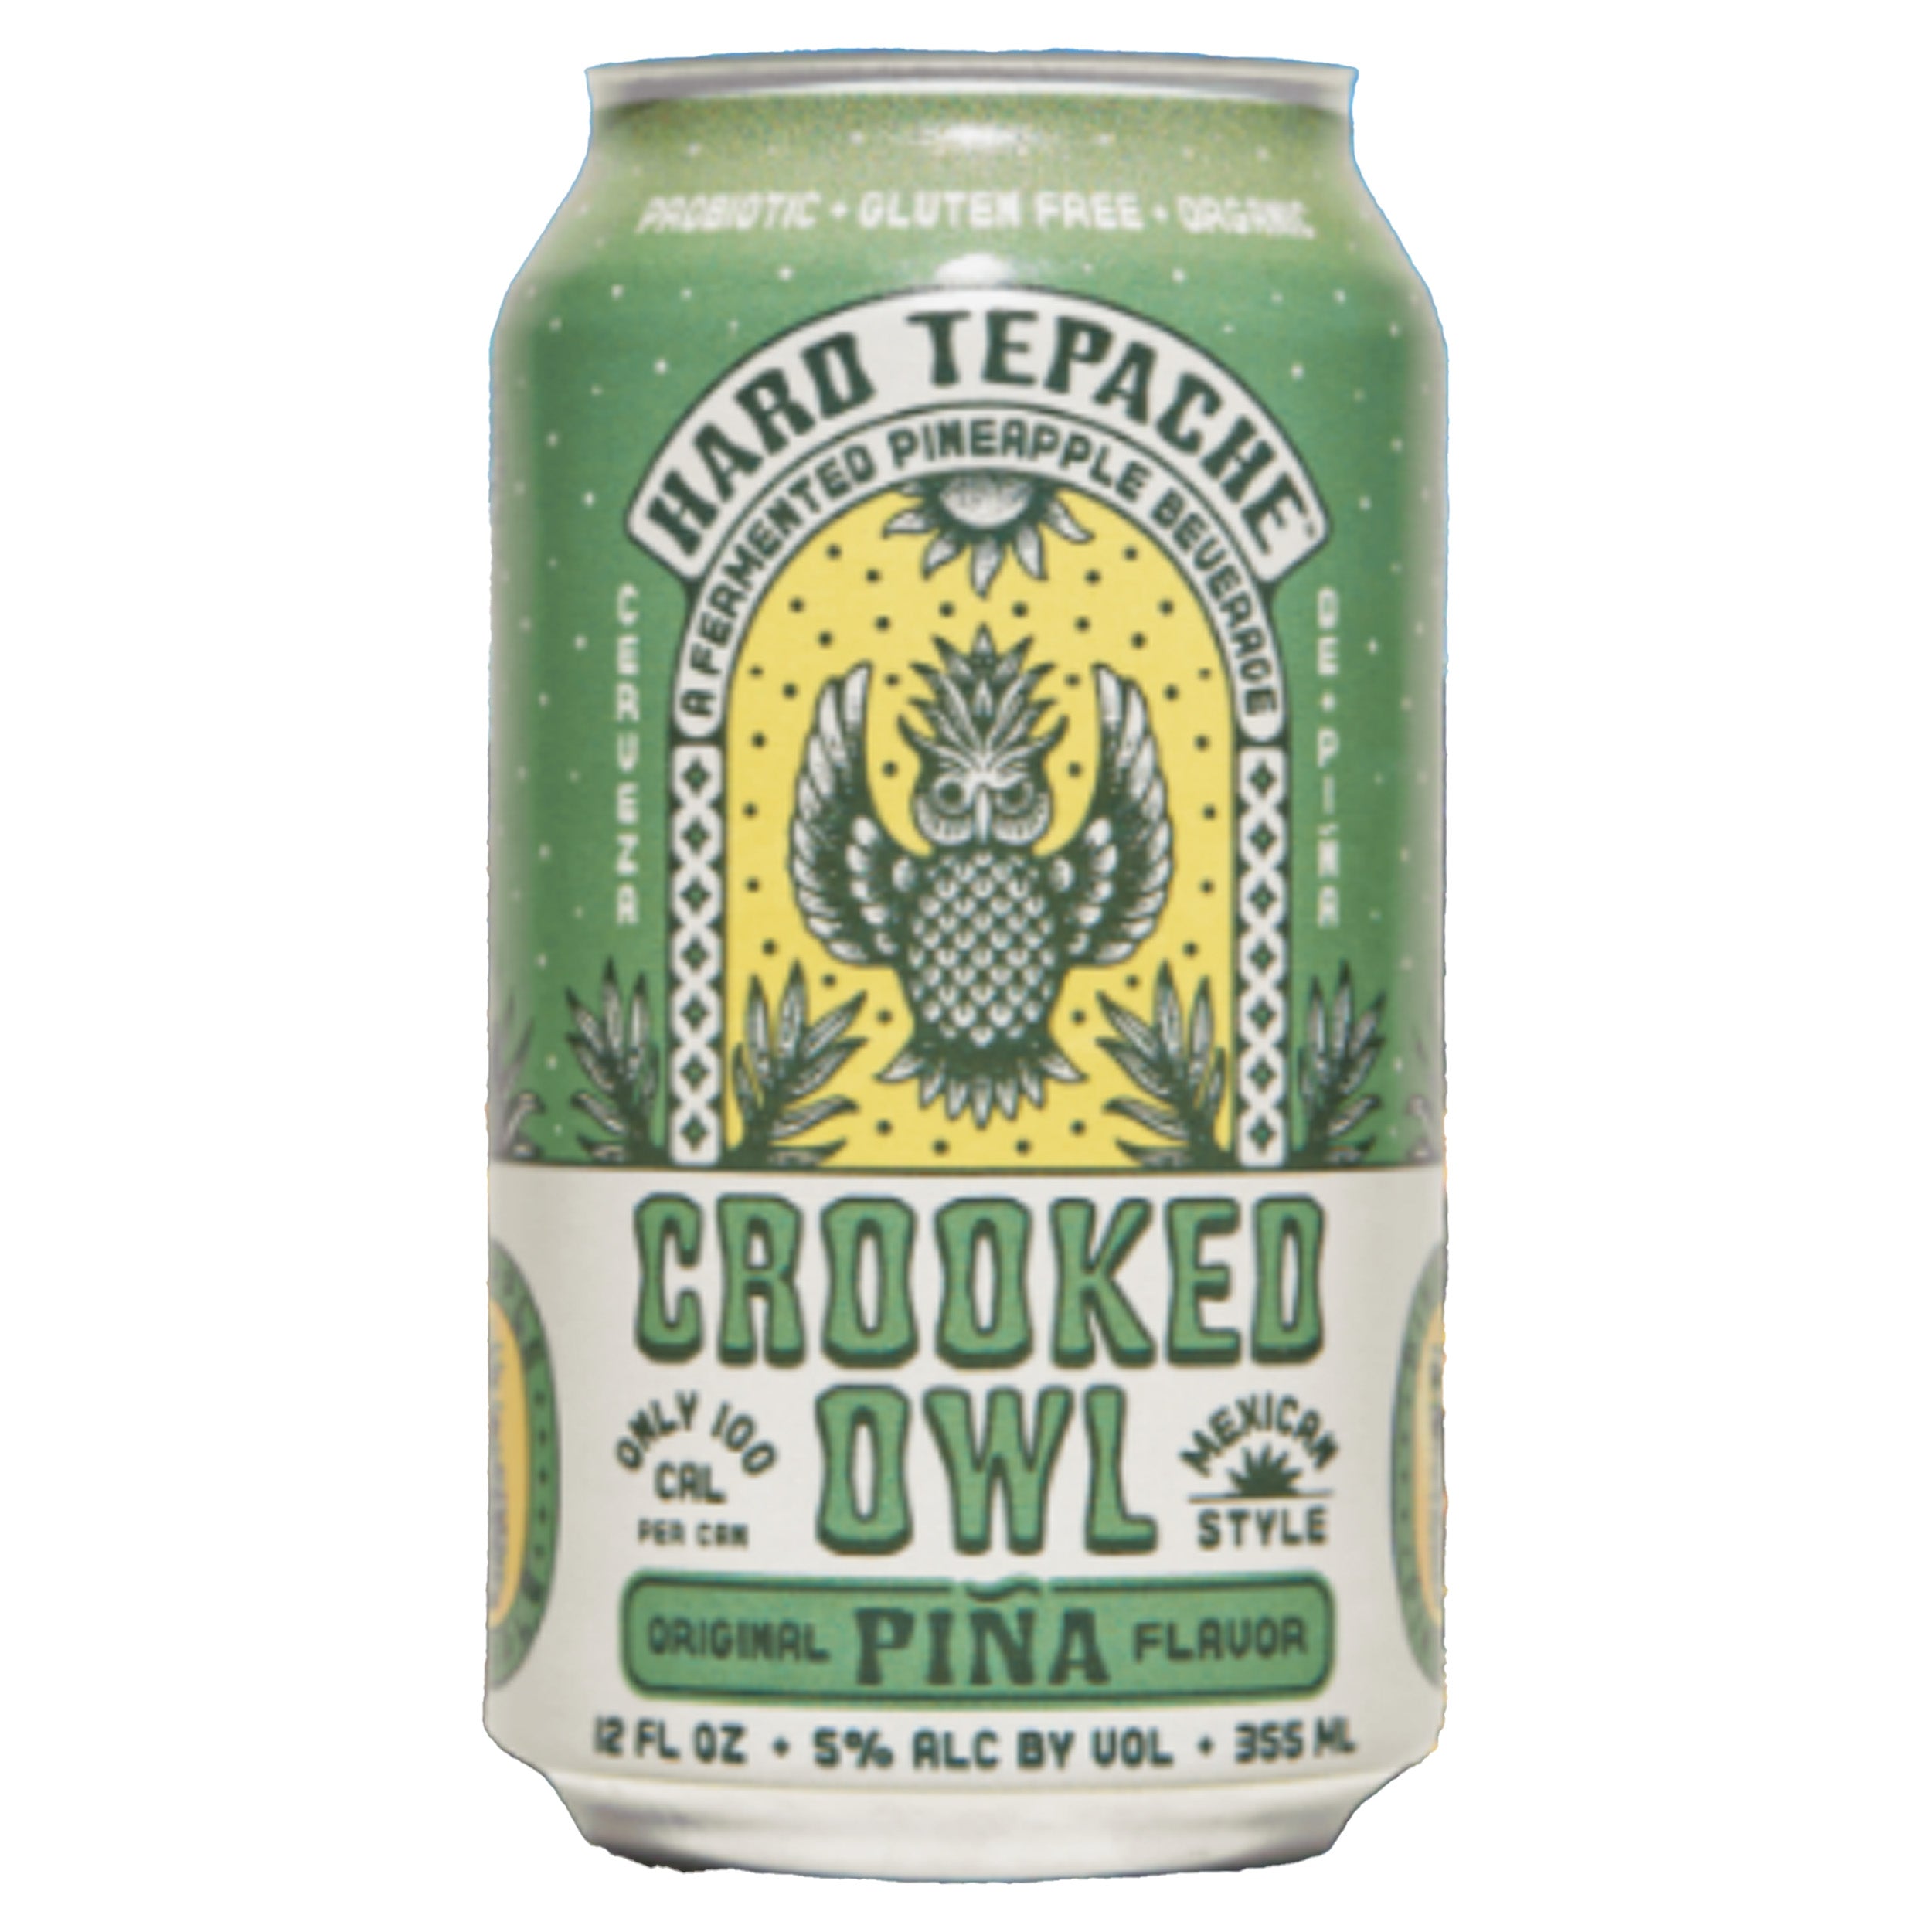 Crooked Owl Piña Hard Tepache (6-Pack)